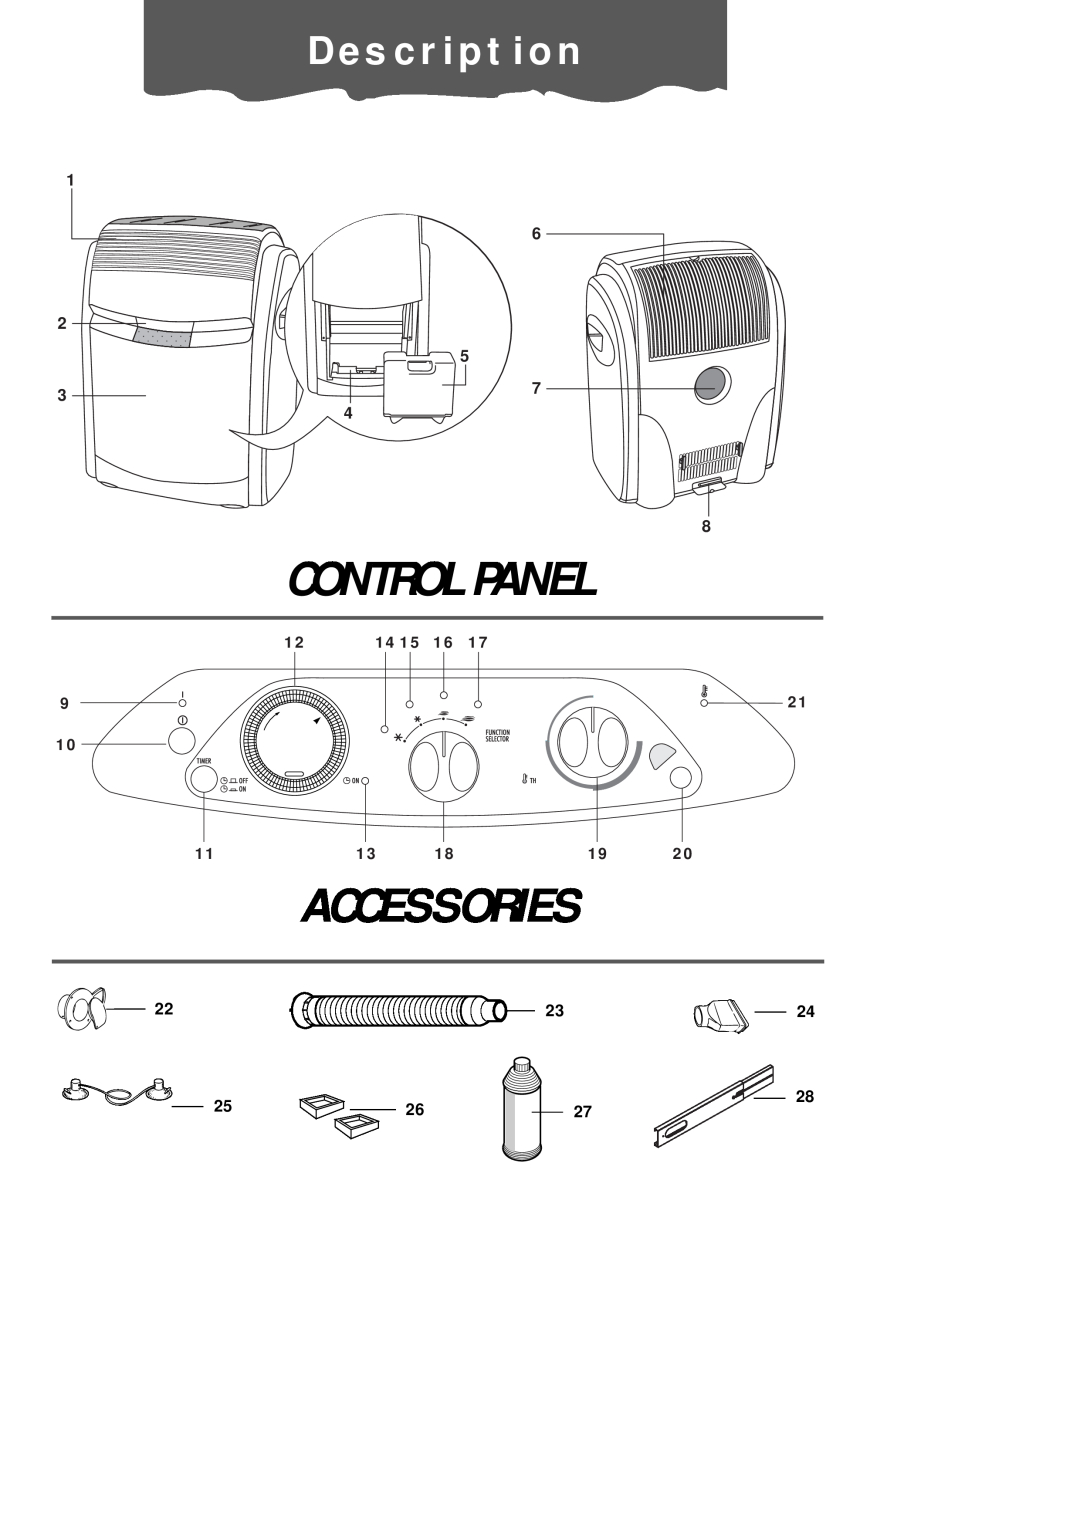 DeLonghi PAC60 manual De s c r i p t i o n, Control Panel, Accessories, 6 5 